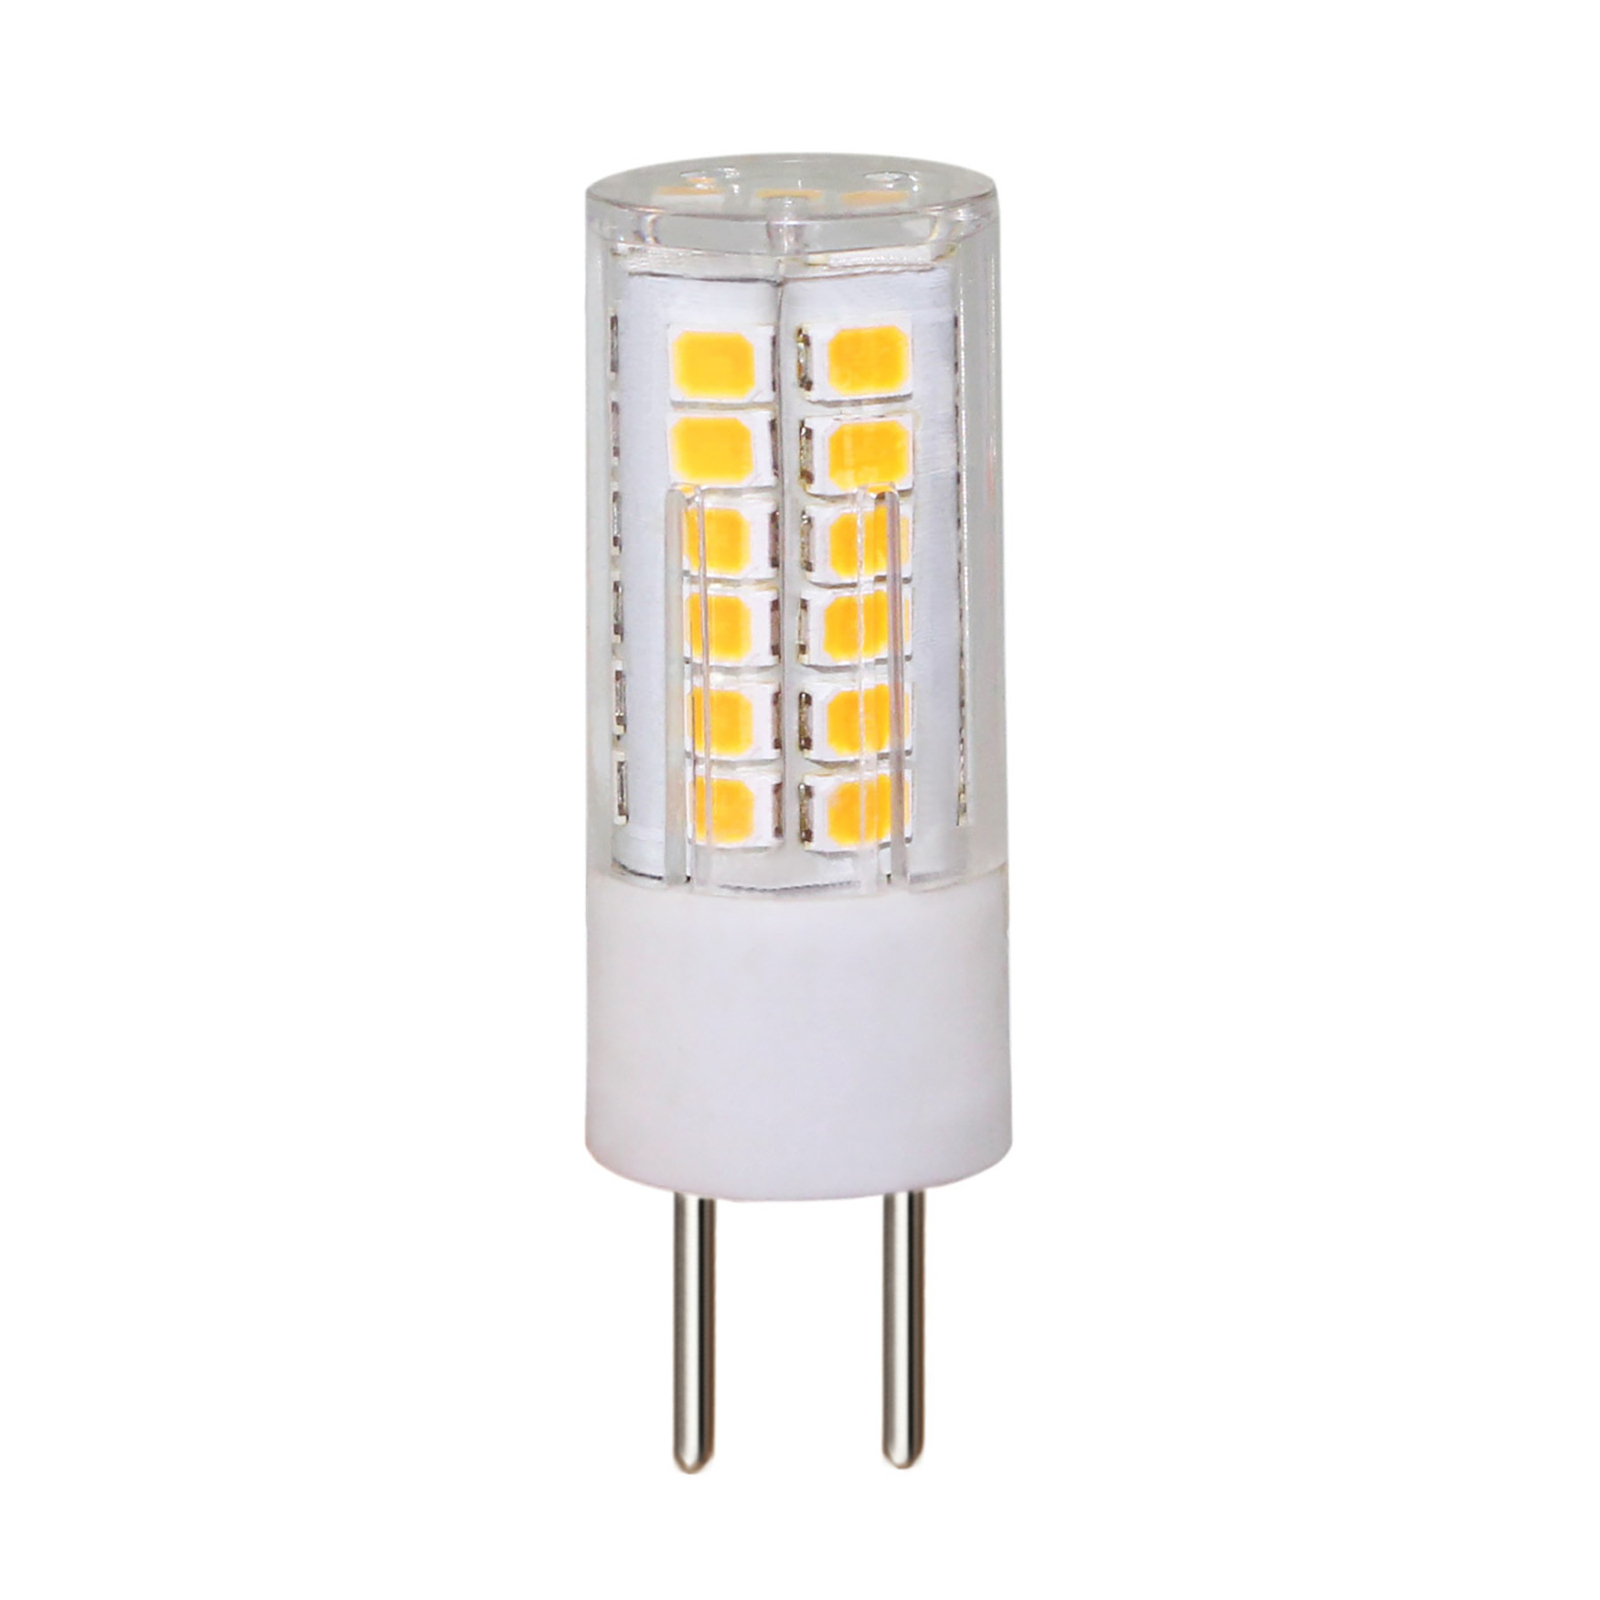 Arcchio LED-Stiftsockellampe G4 3,4W 2.700K 3er